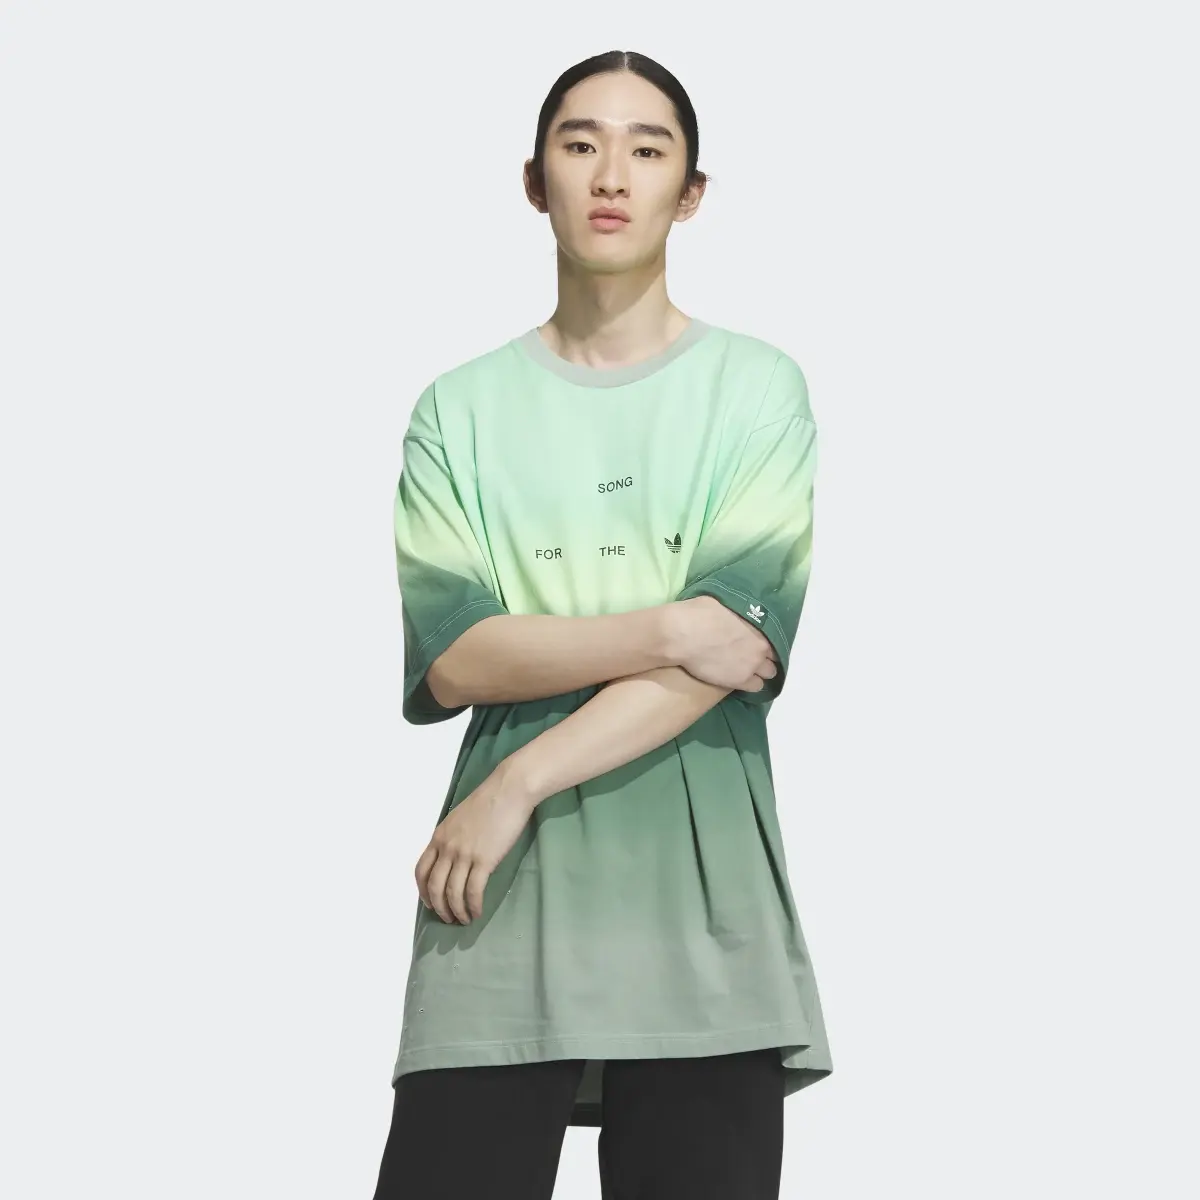 Adidas SFTM T-Shirt (Gender Neutral). 2